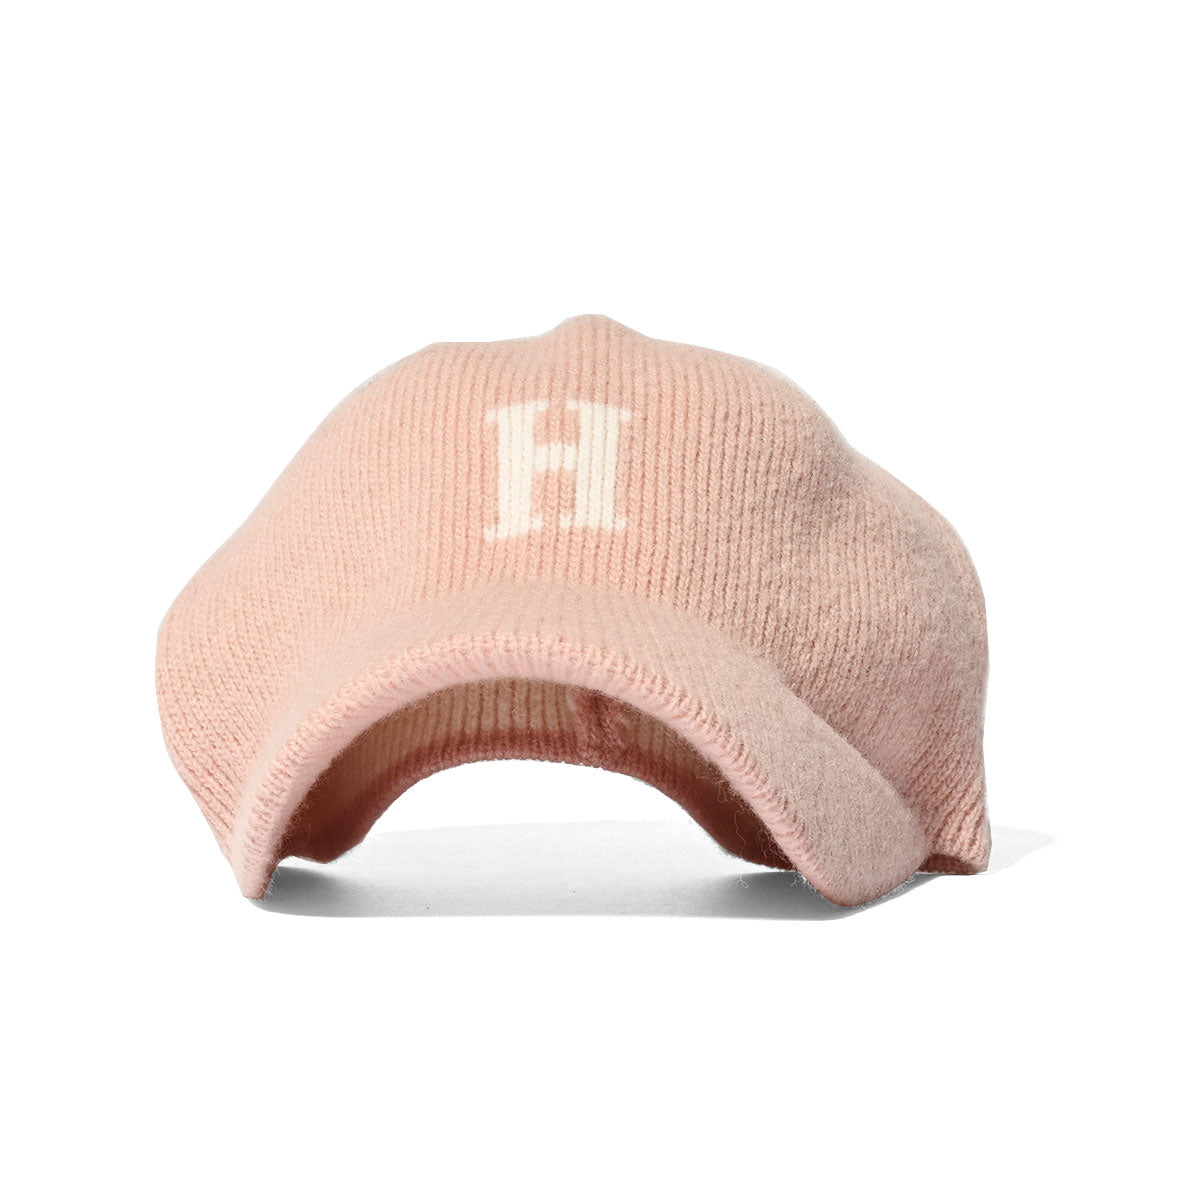 HOMEGAME - H LOGO 針織棒球帽 粉紅色